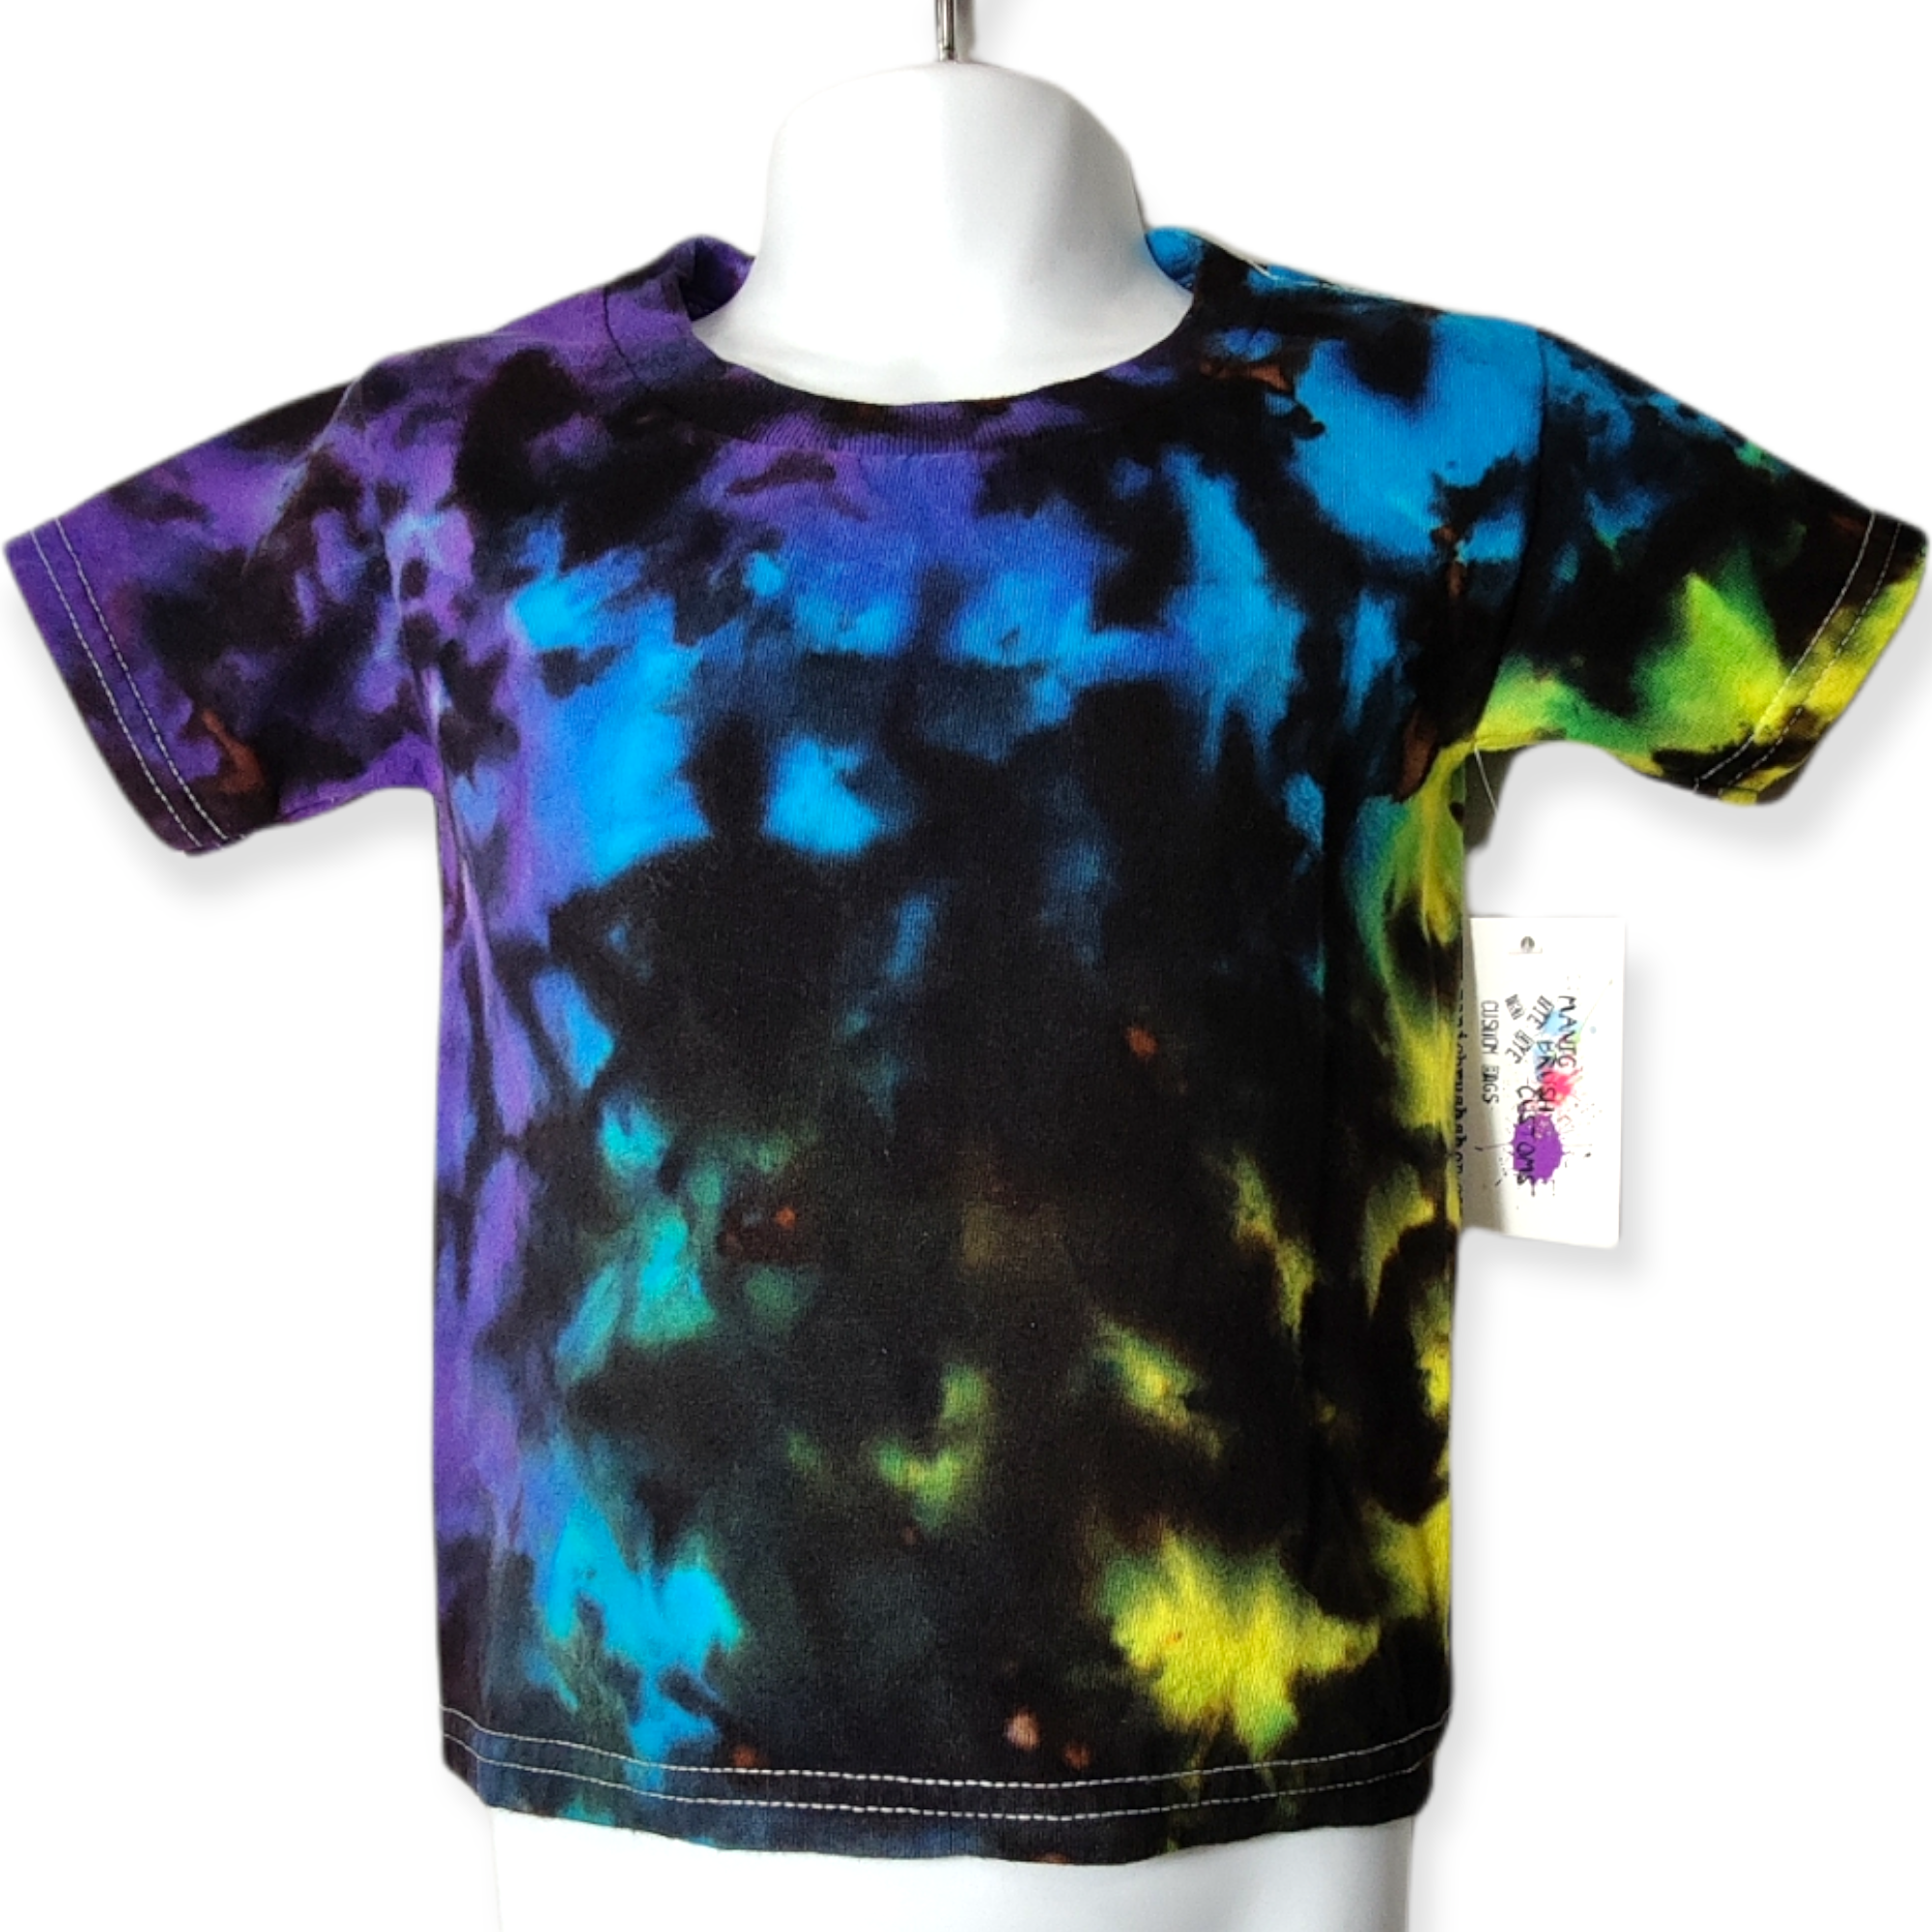 Kids Tie Dye T-shirt size 3T